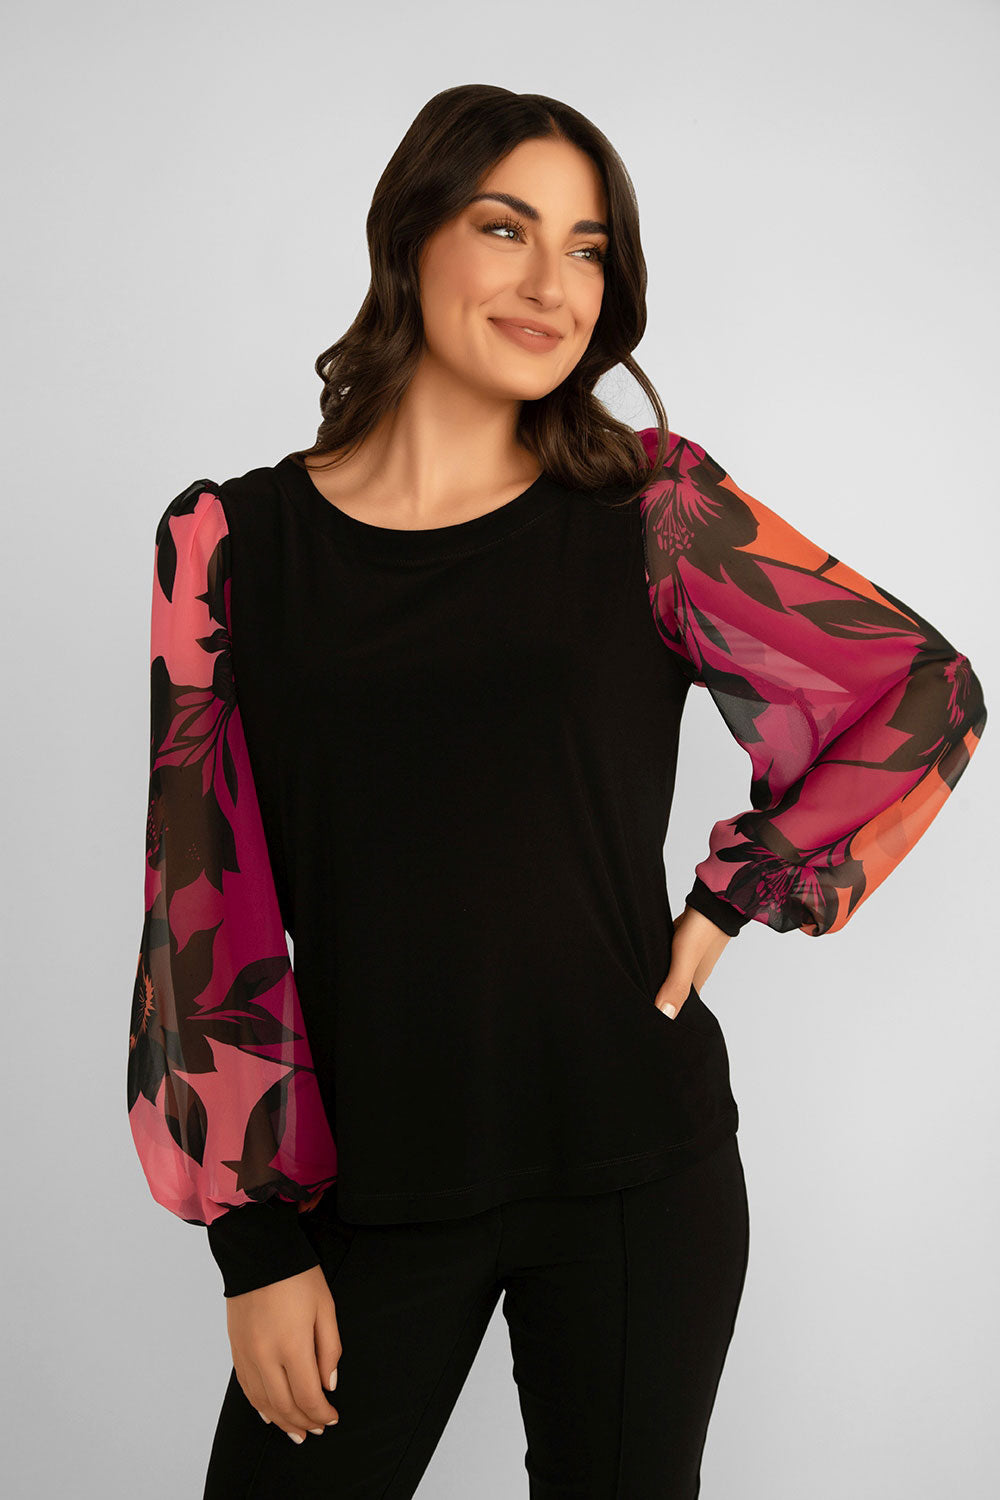 Women's Clothing FRANK LYMAN (233177) Floral Long Sleeve Top in BLACK/MAGENTA